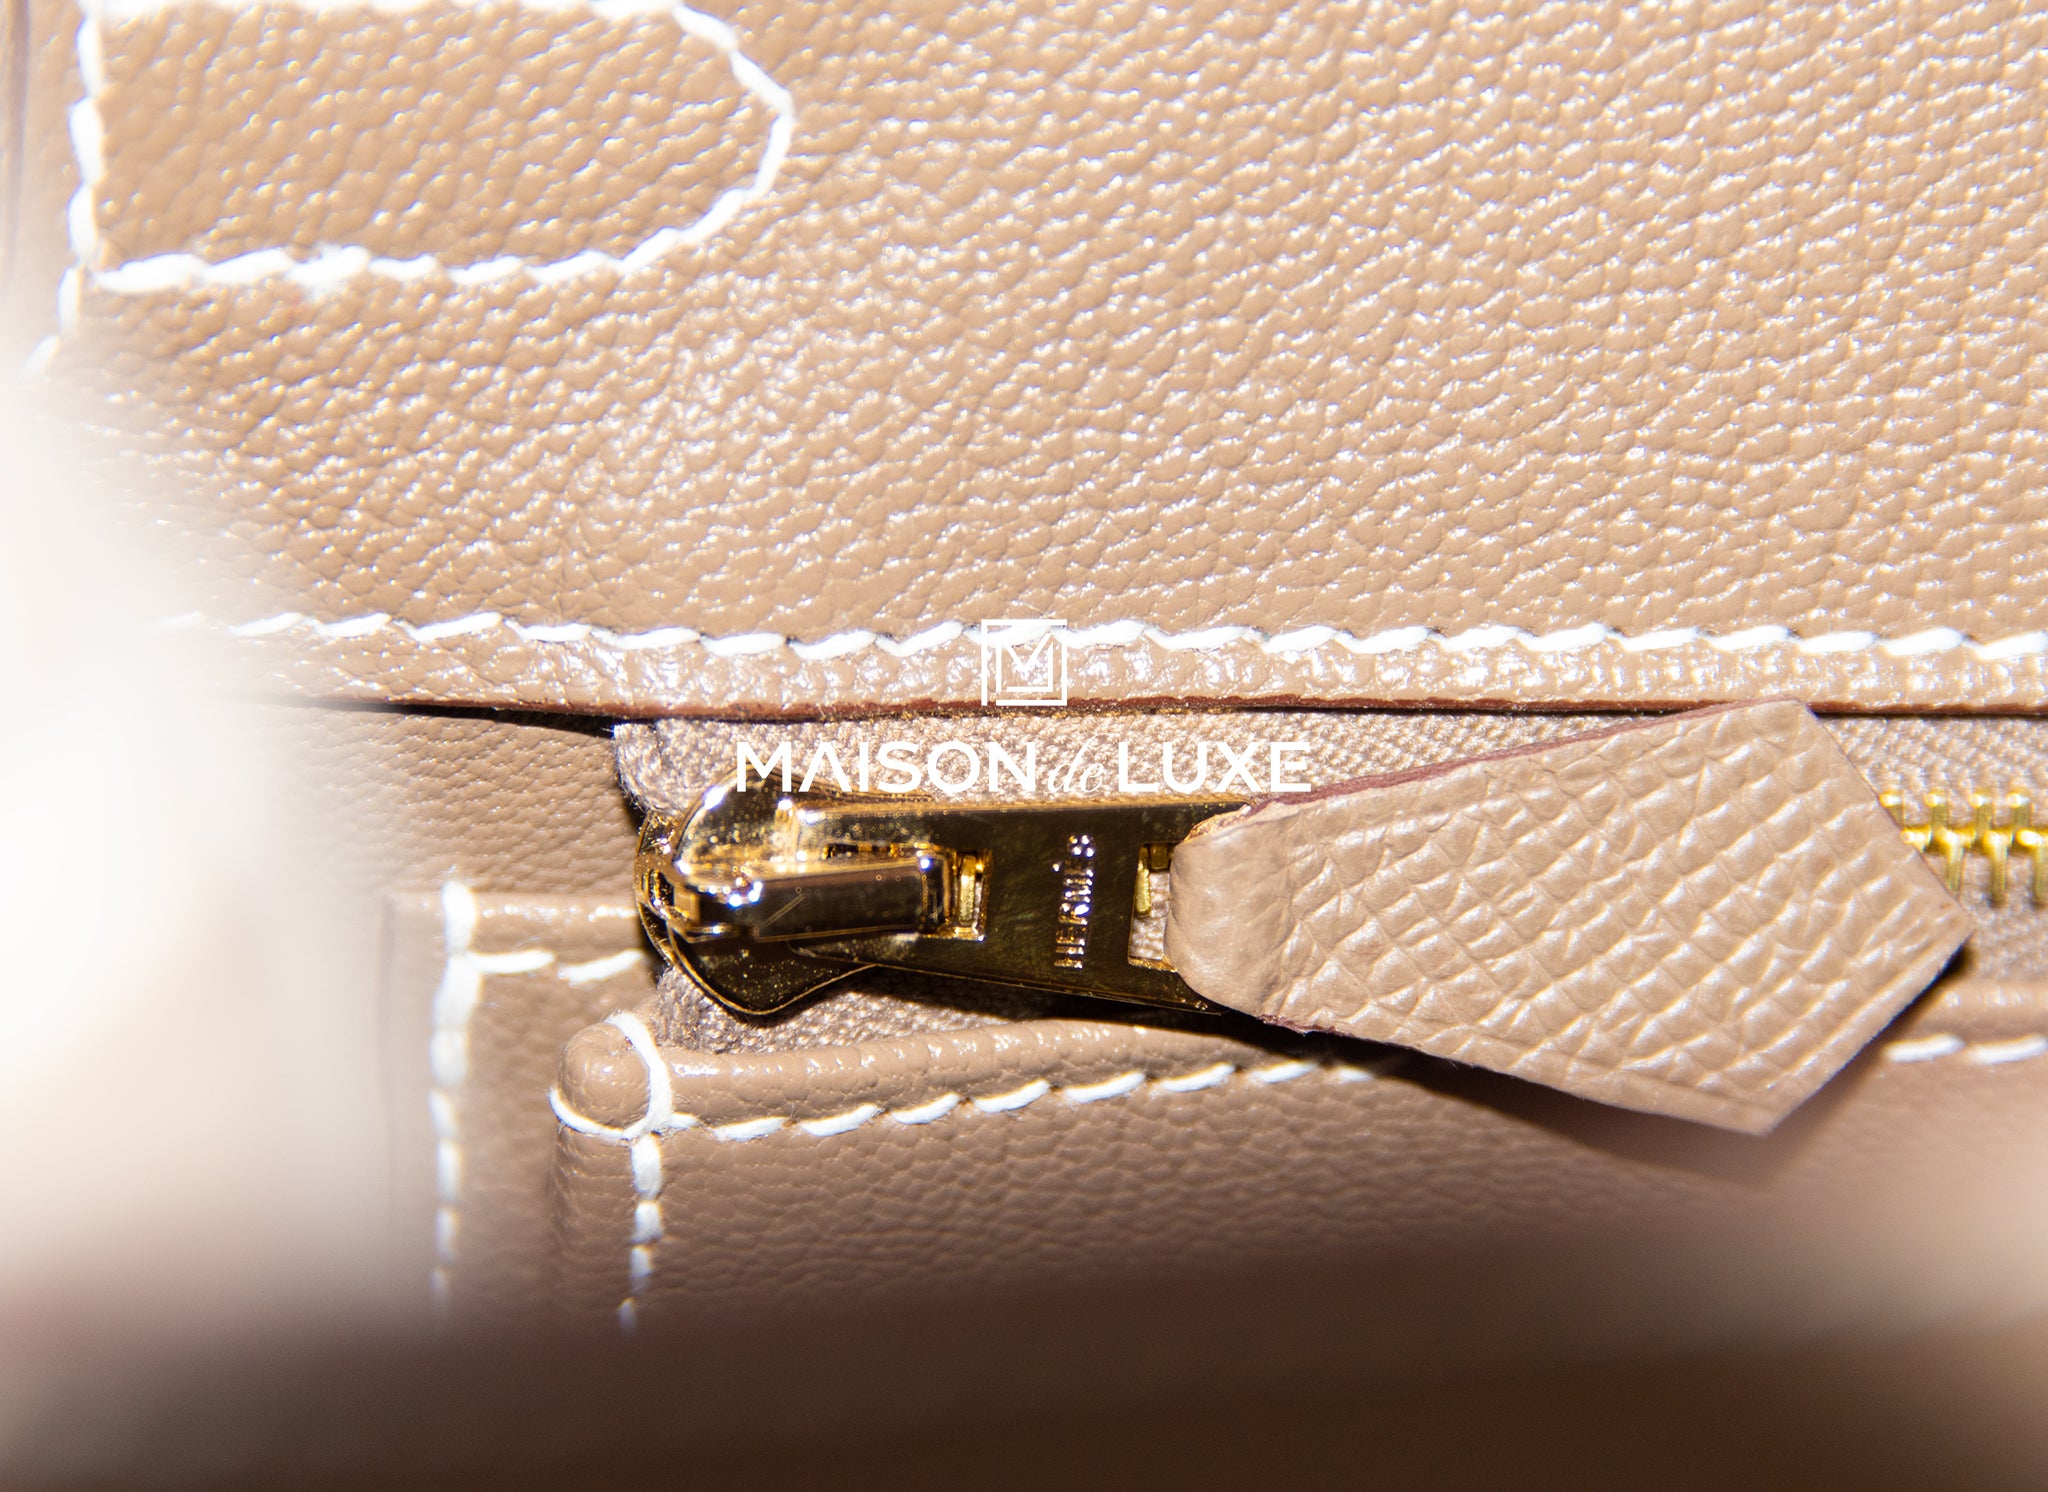 Hermès 25cm Kelly Sellier Etoupe Epsom Gold Hardware – Privé Porter